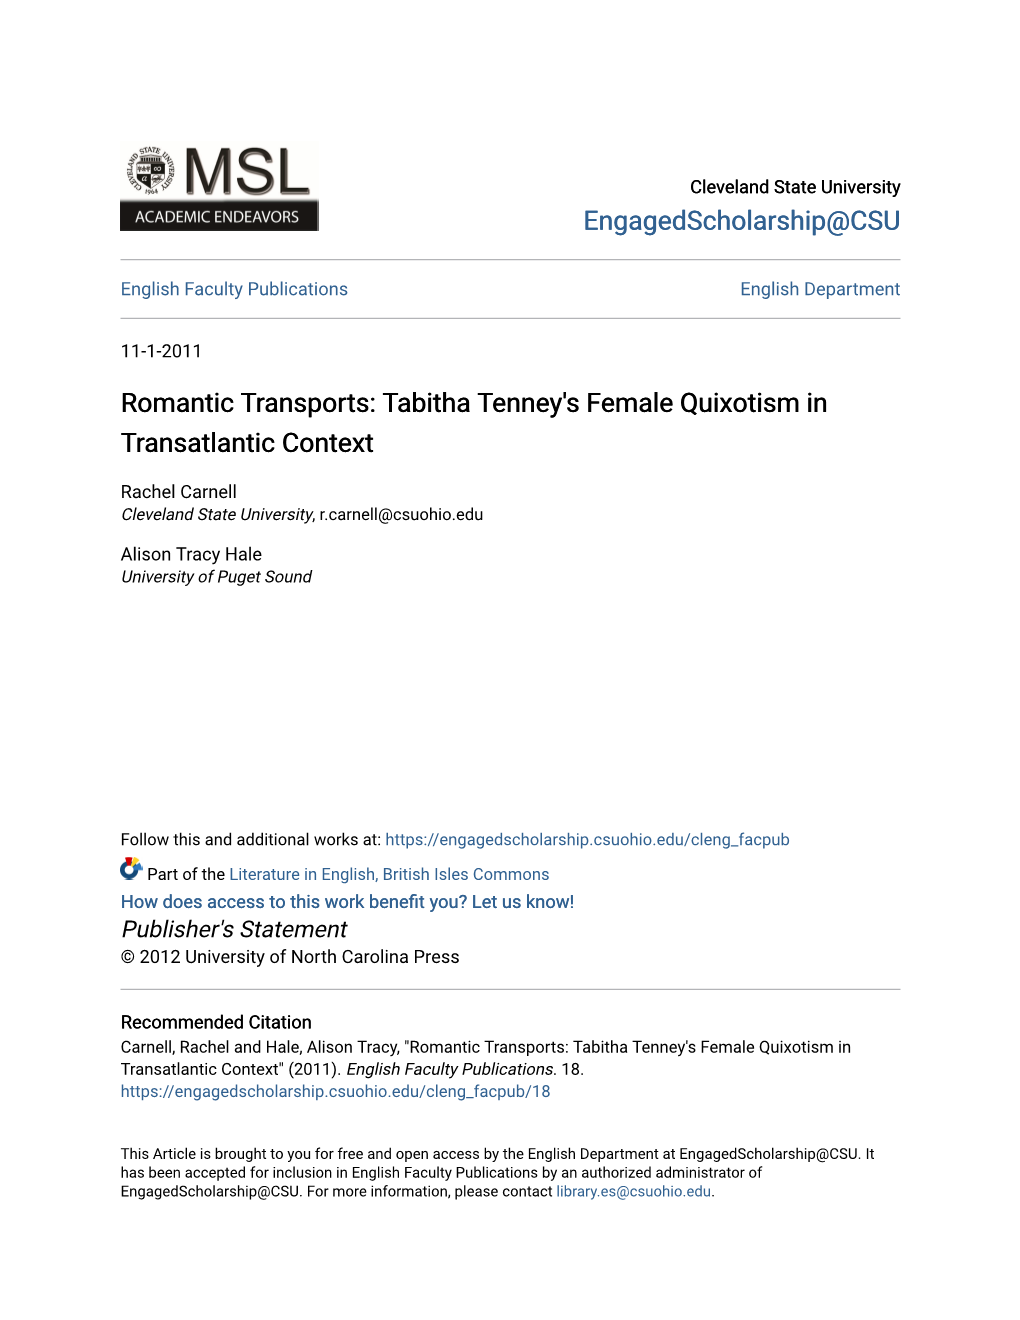 Tabitha Tenney's Female Quixotism in Transatlantic Context